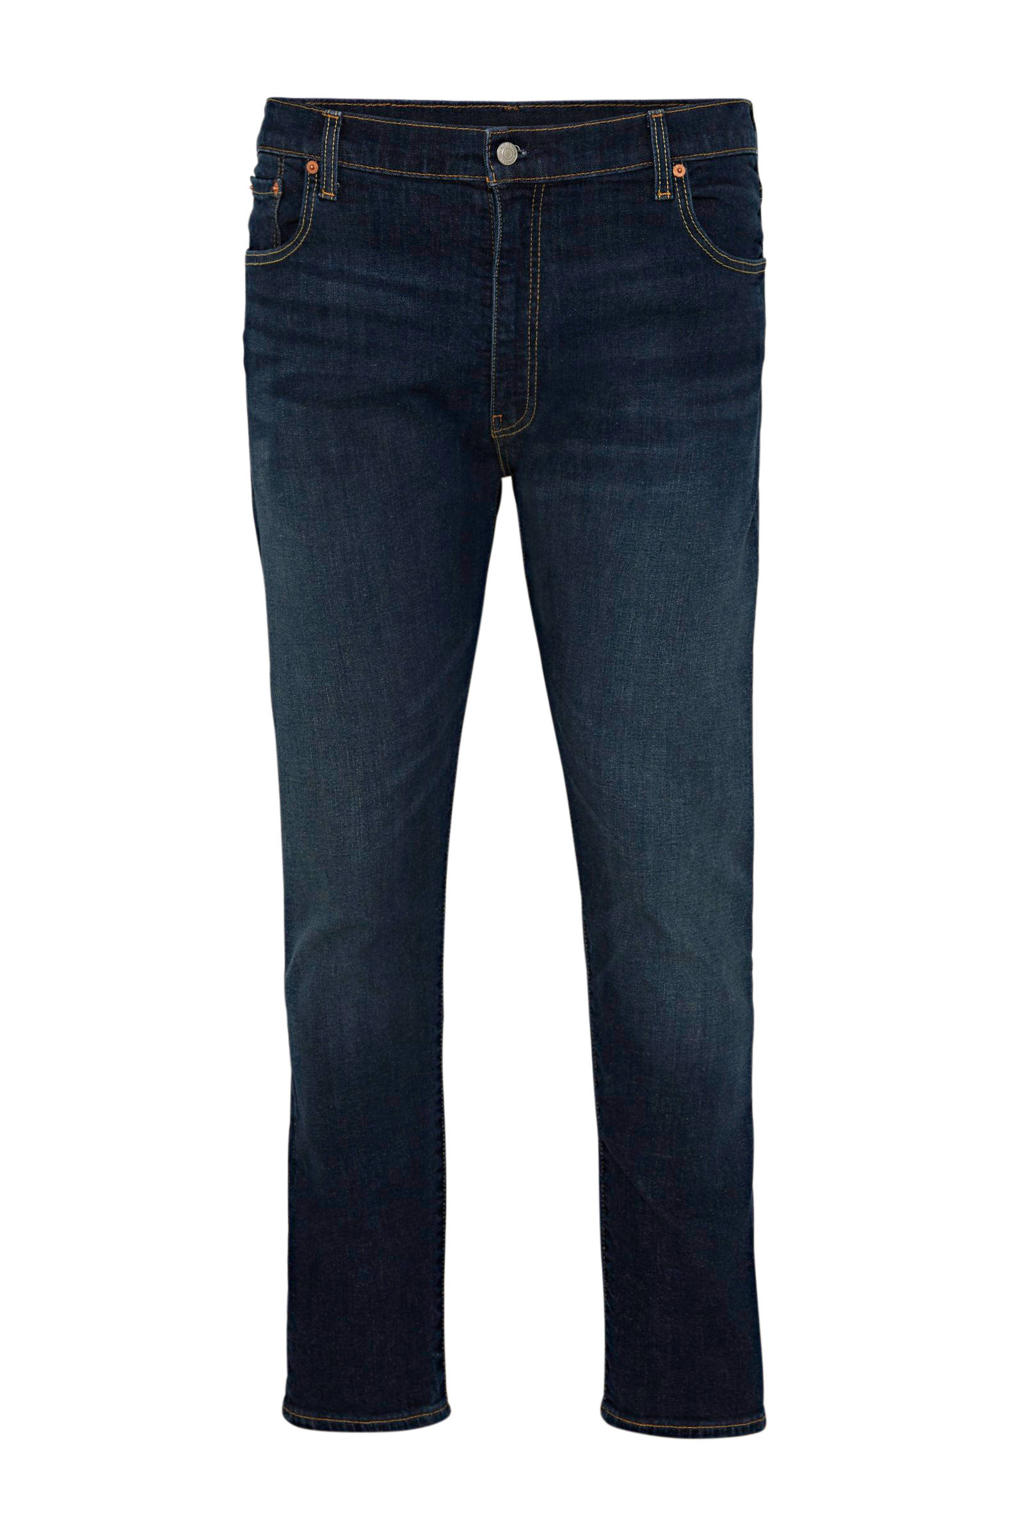 Levi's Big and Tall tapered fit jeans 502 Plus Size dark denim